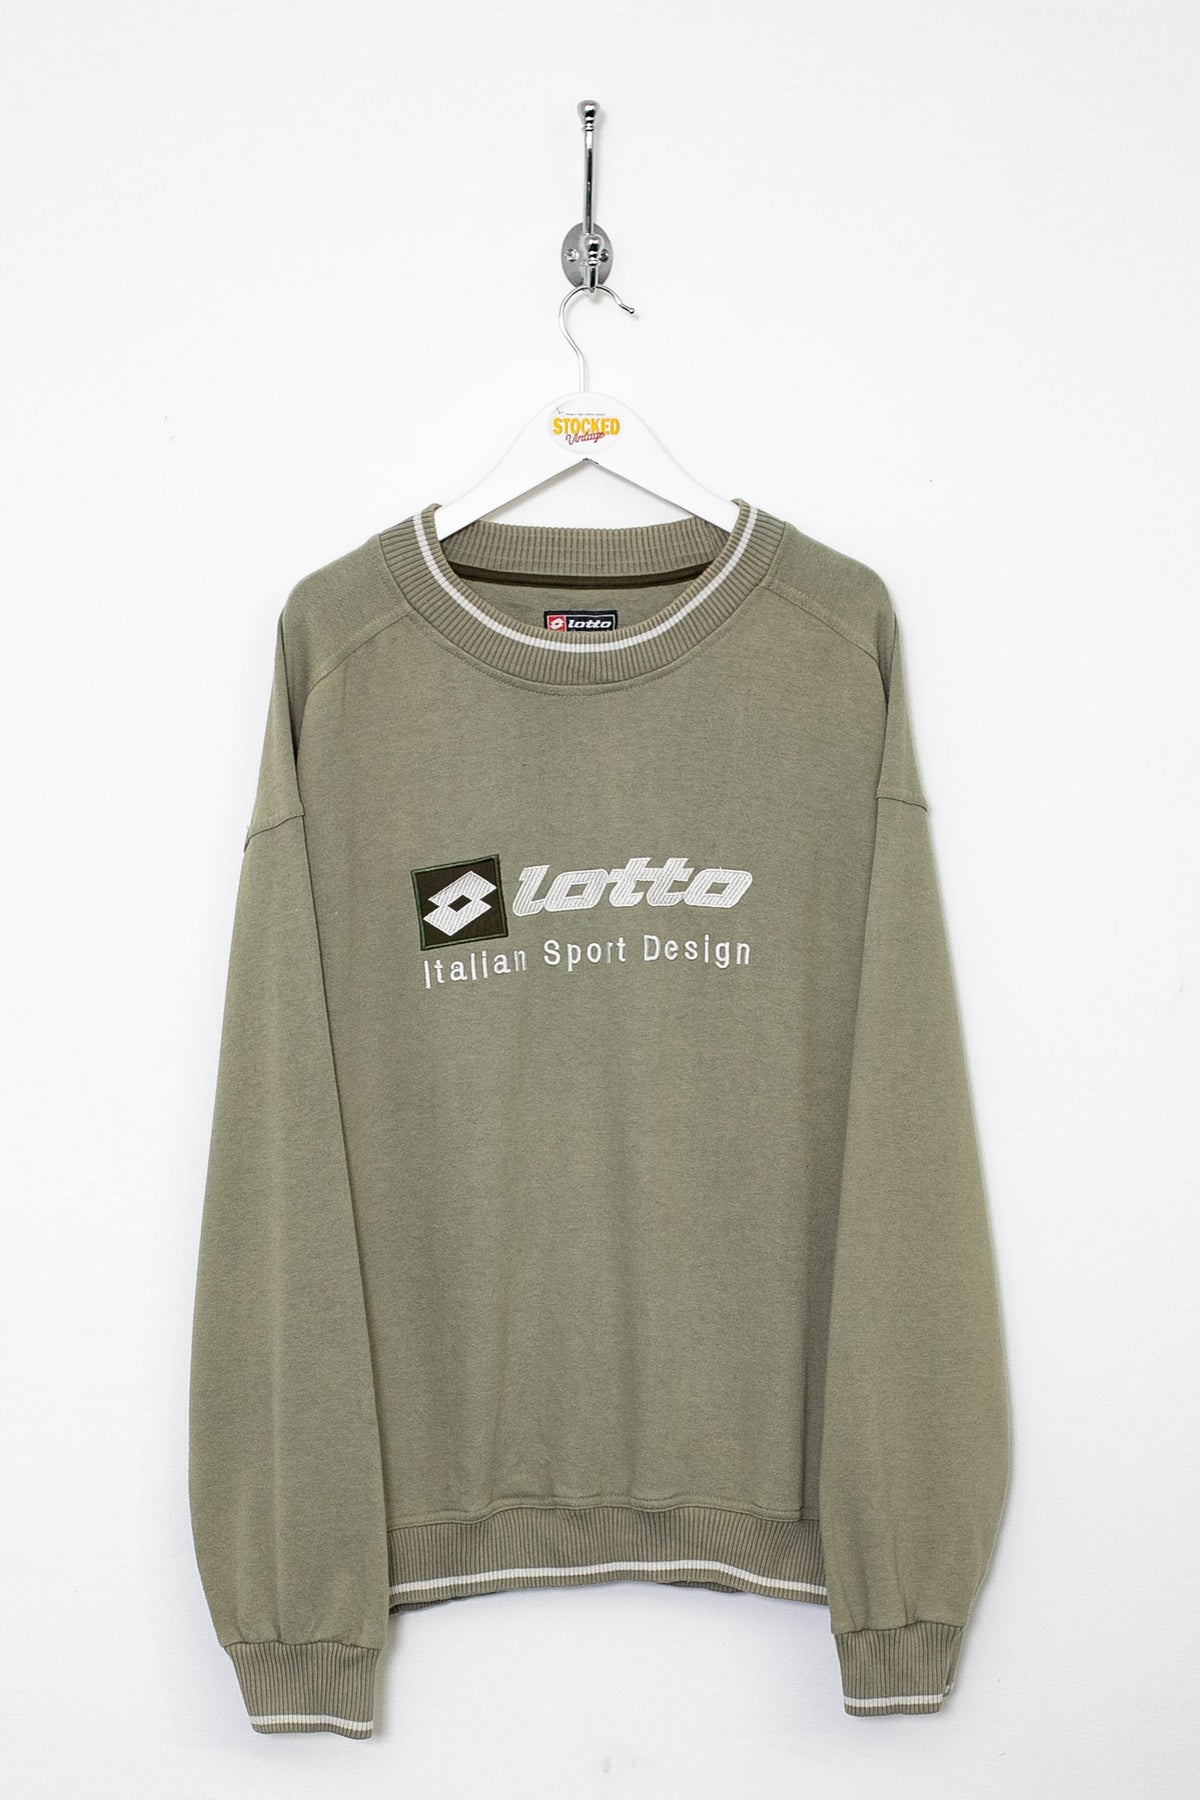 00s Lotto Sweatshirt (L)